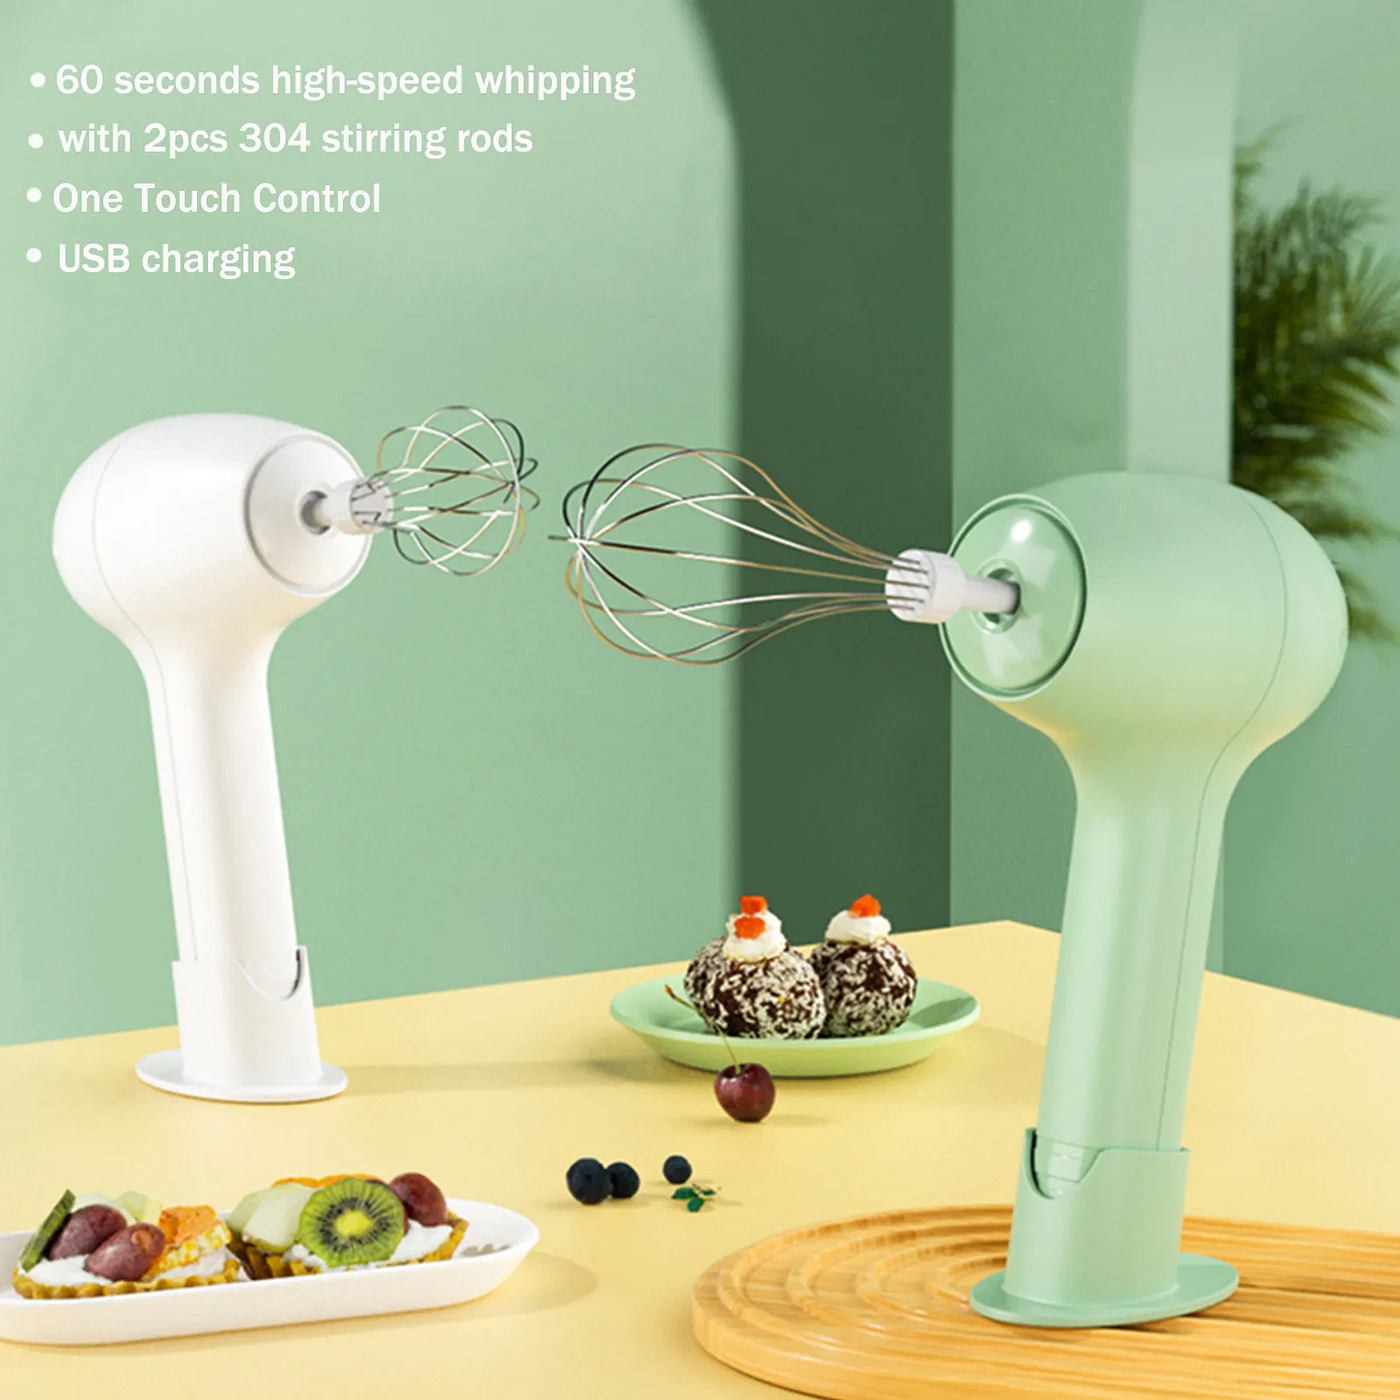 Hand Food Blender Mixer Cordless Speed Whisk System USB, by Innovista